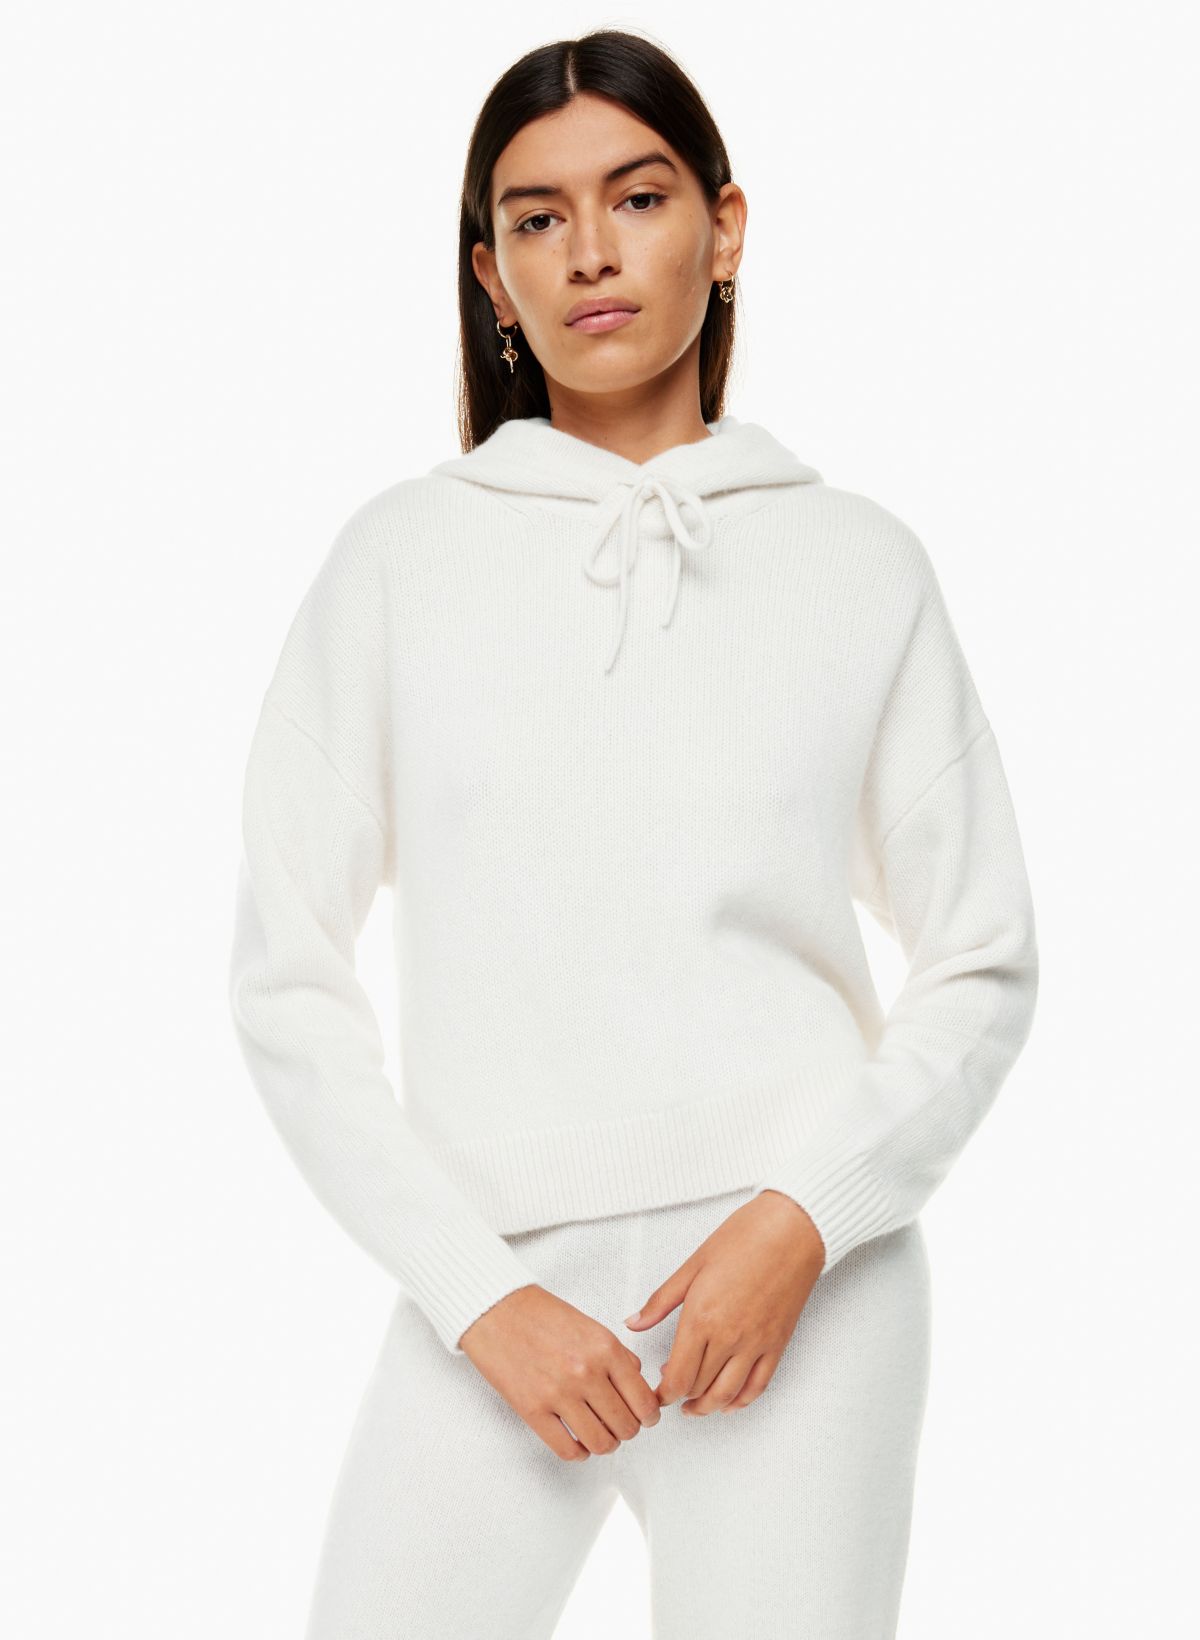 Women’s white cashmere blend sweatshirt with hood